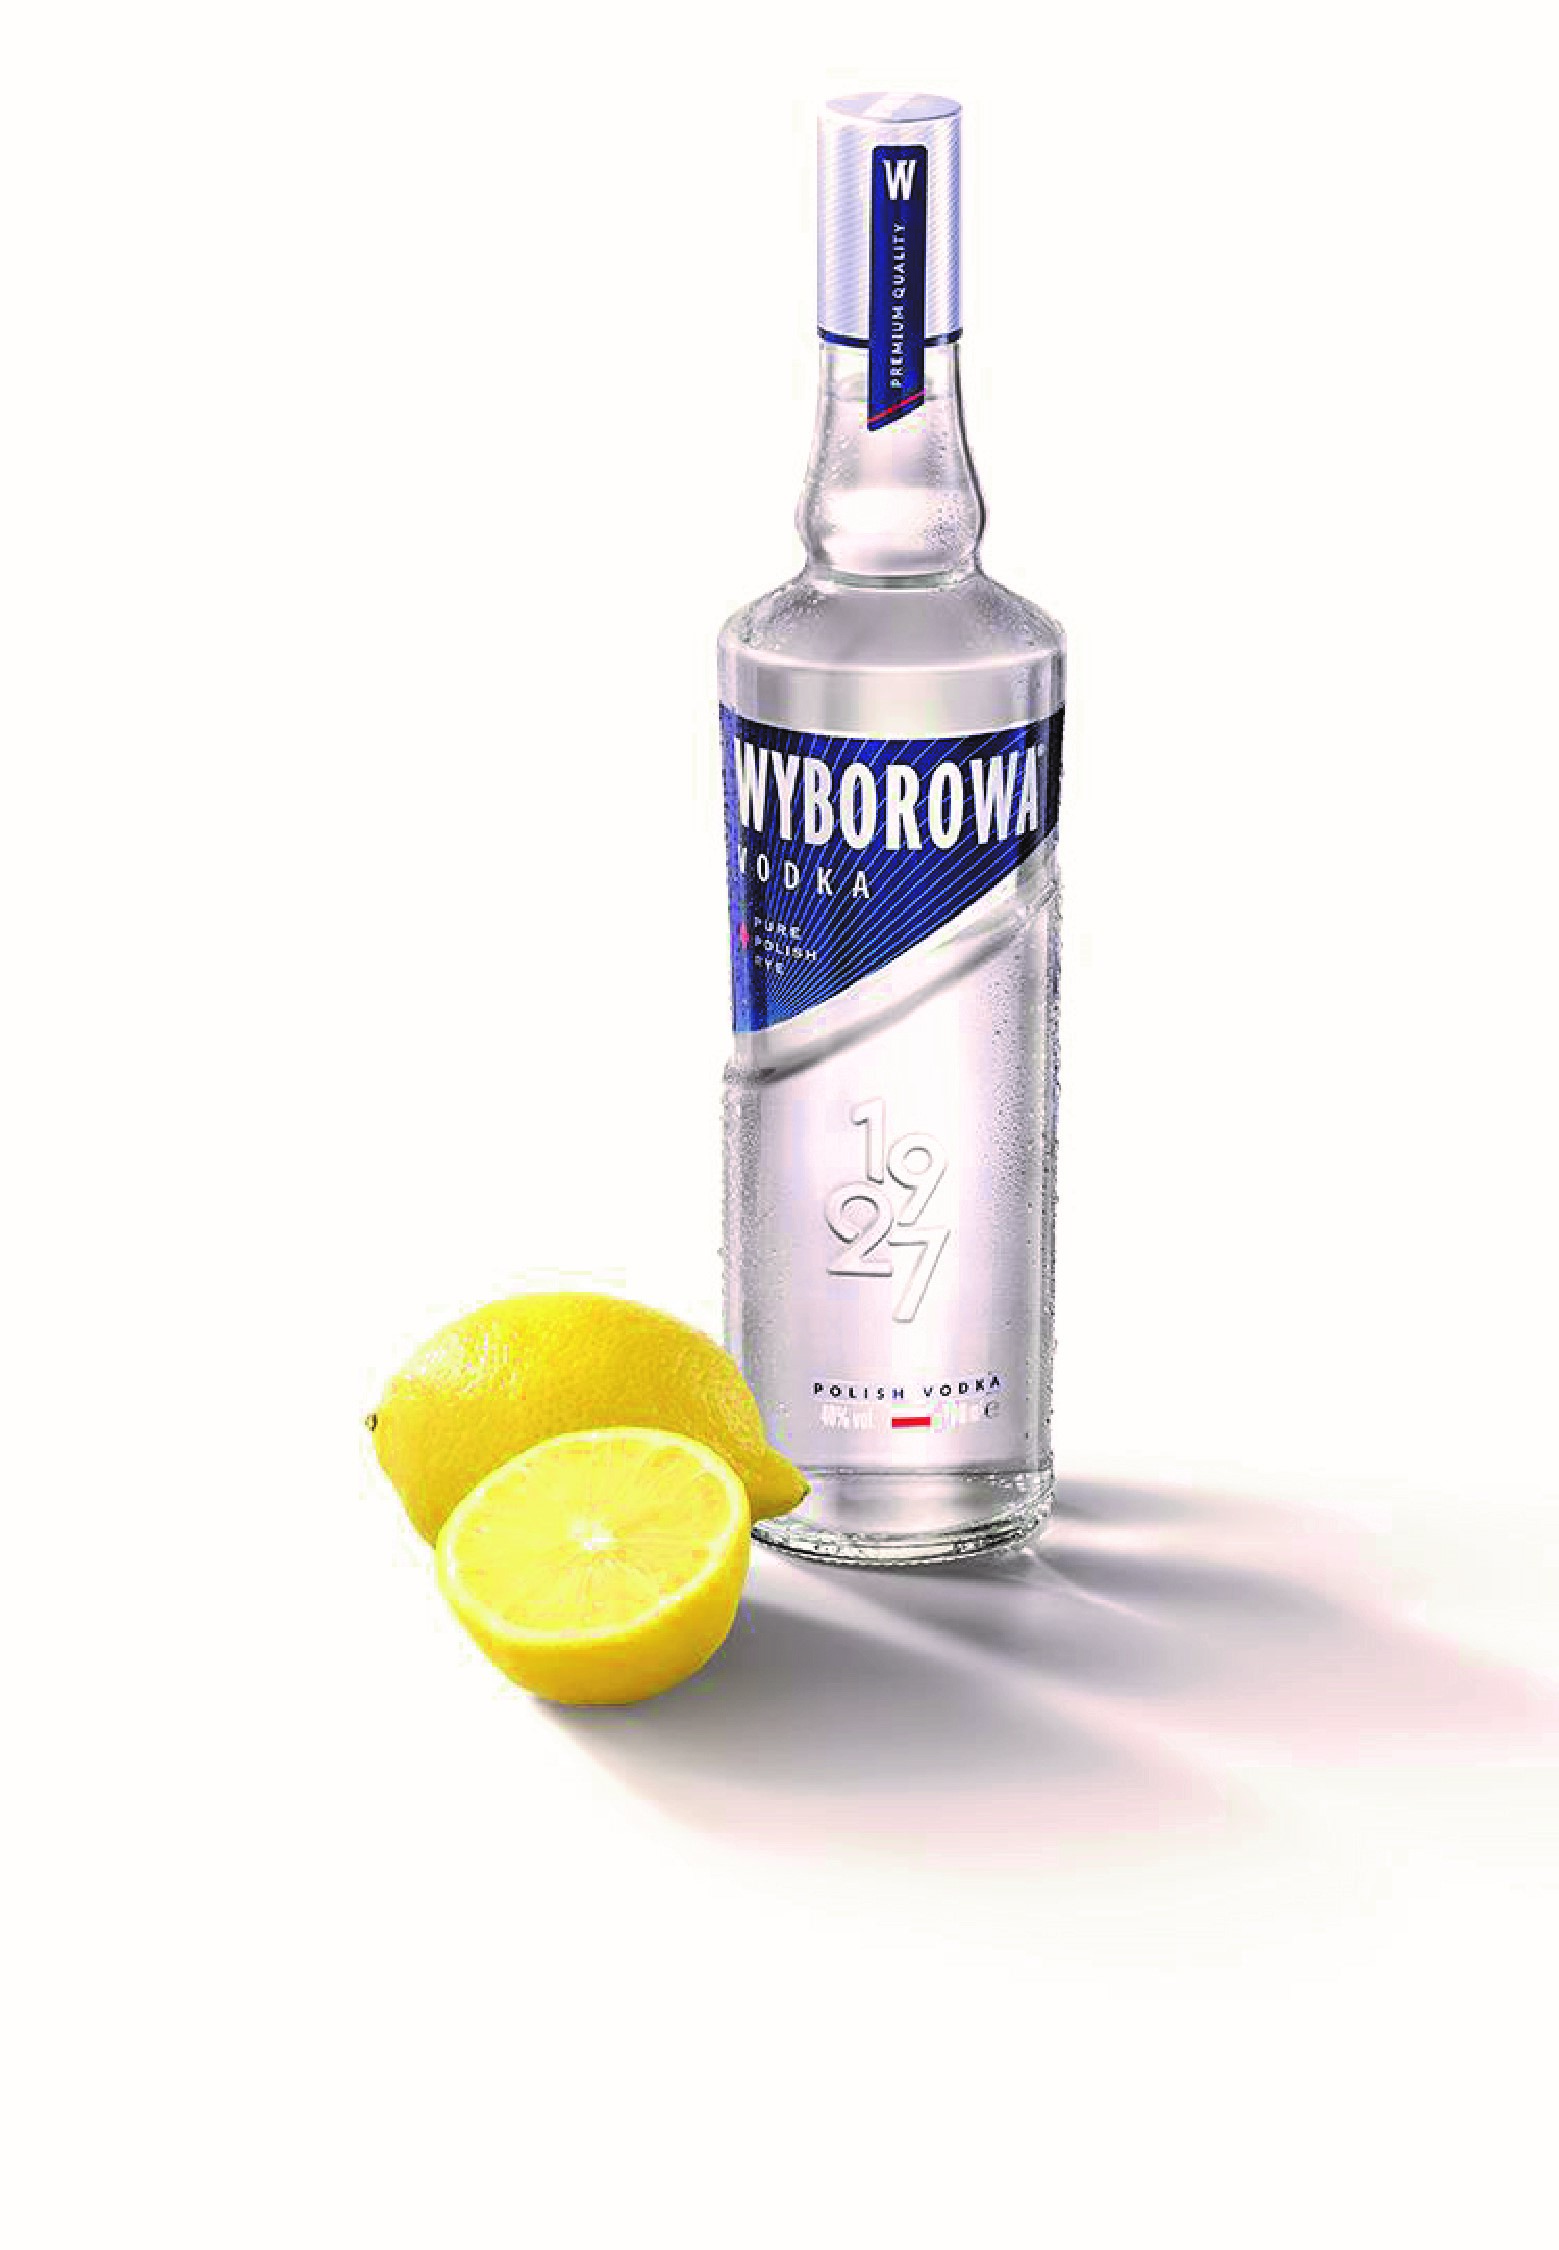 Vodka polaco